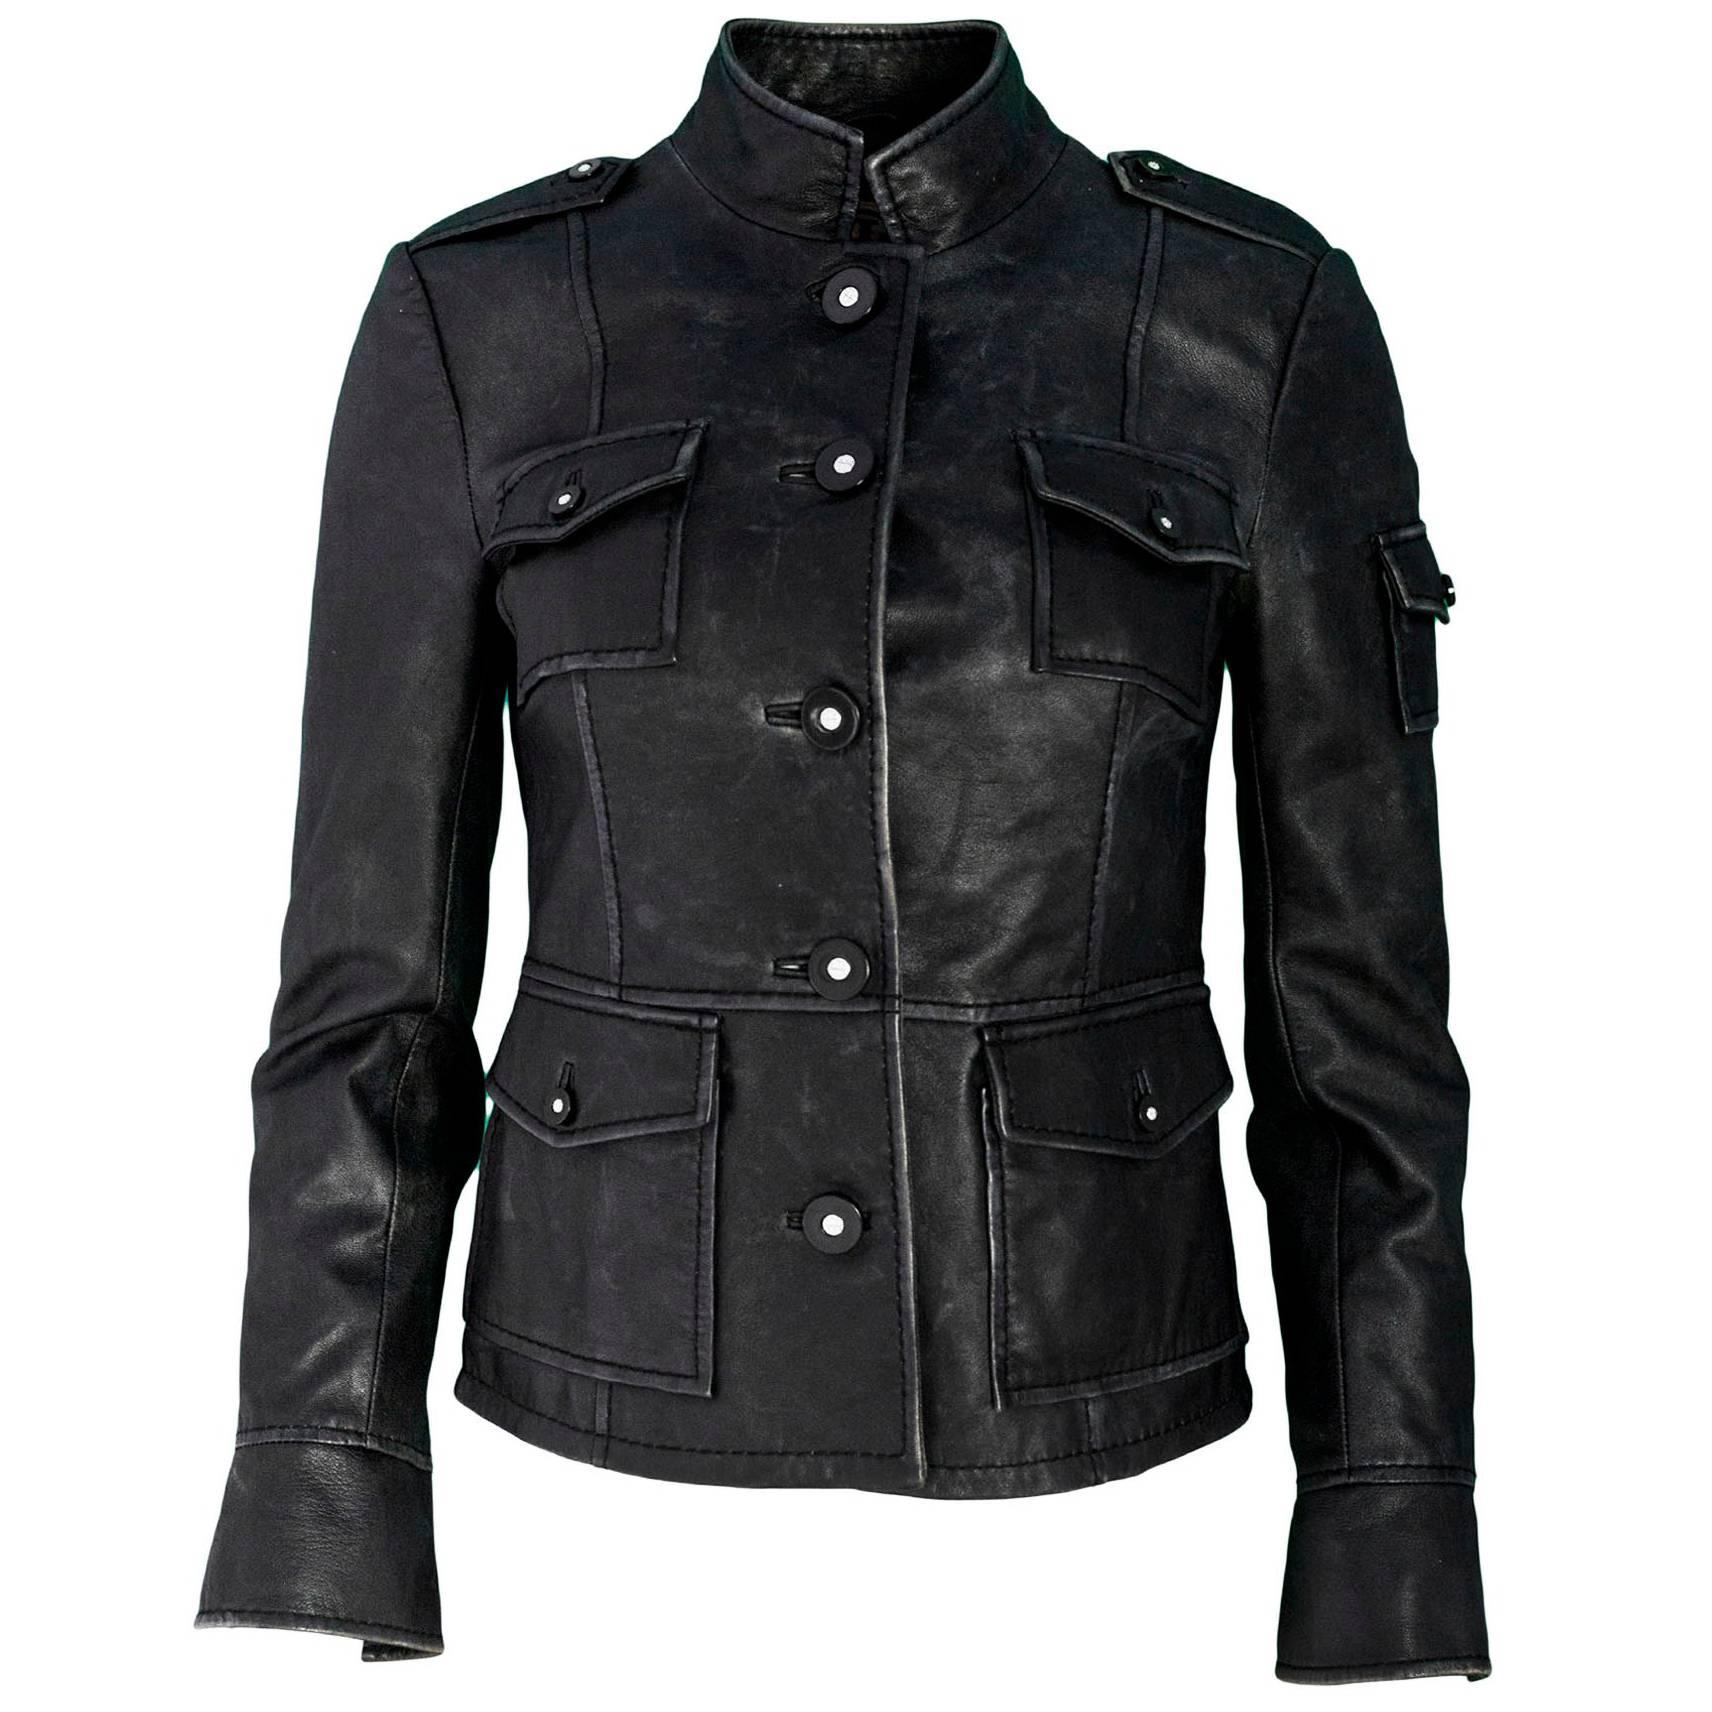 Tory Burch Black Distressed Leather Military Jacket Sz 2